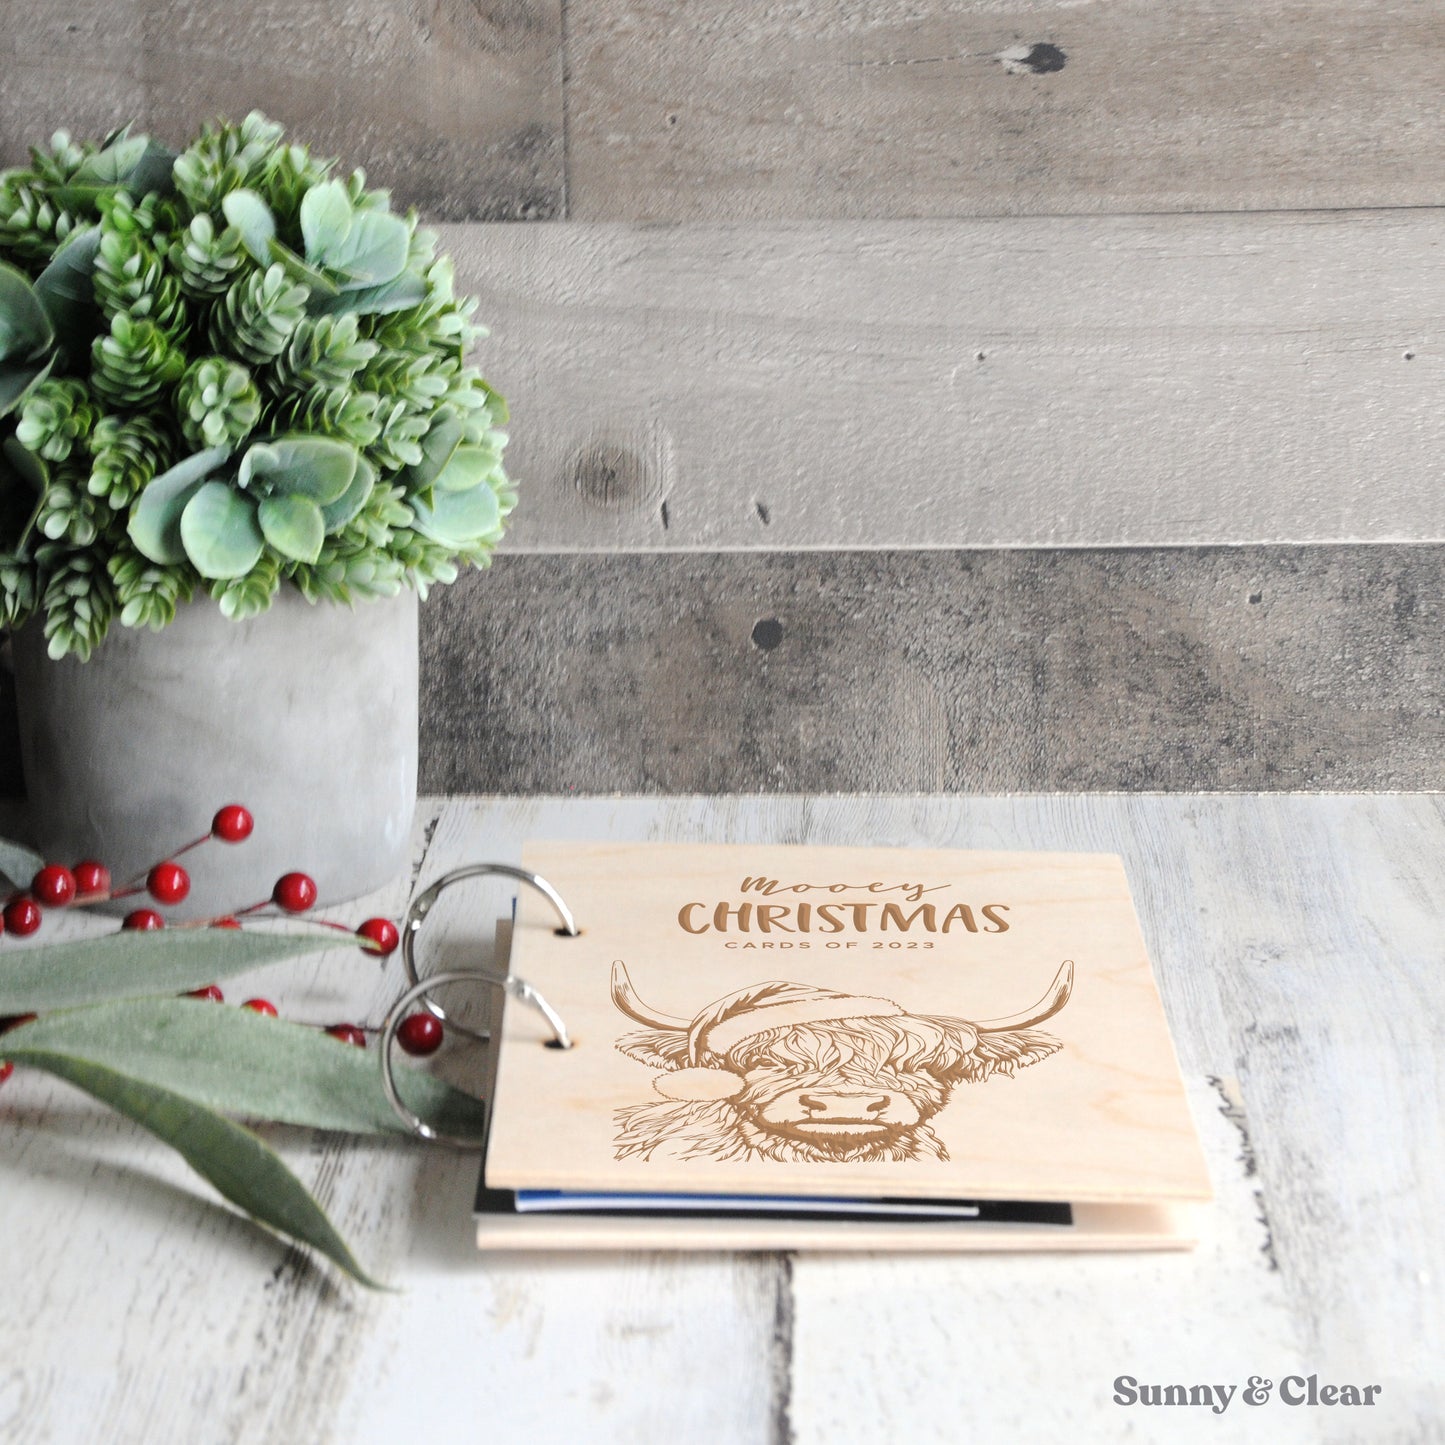 Christmas Card Binder, Card Keeper, Card Holder Book, Greeting Card Display